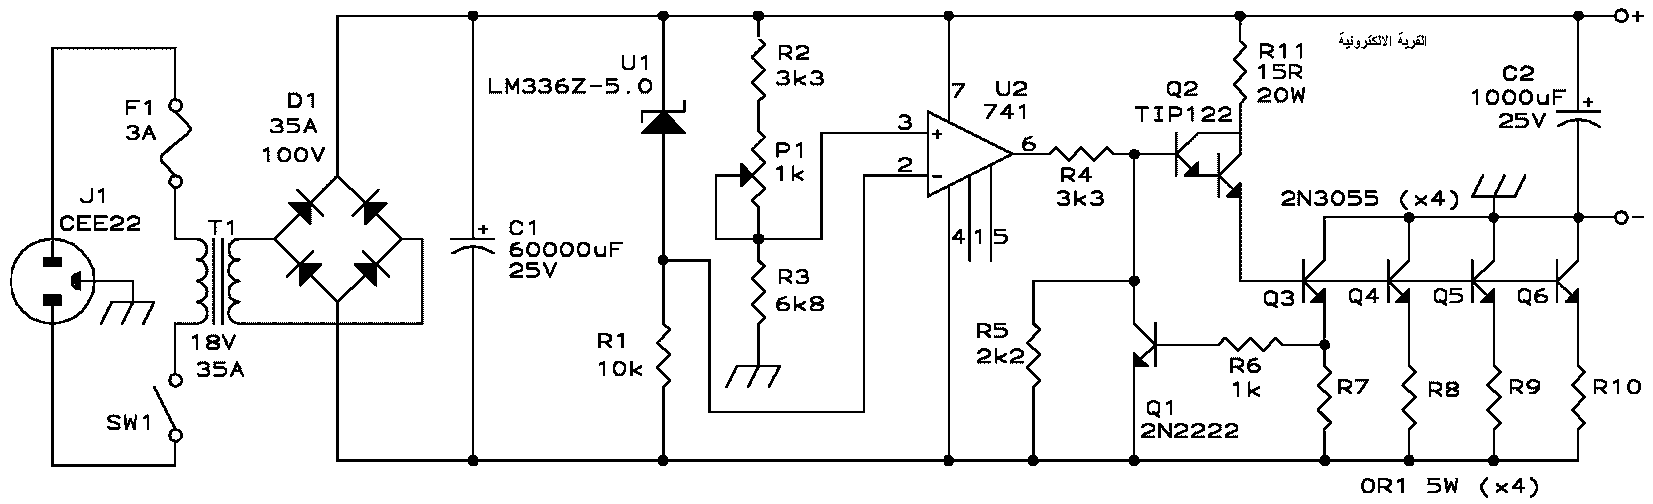 13.8 Volt circuit